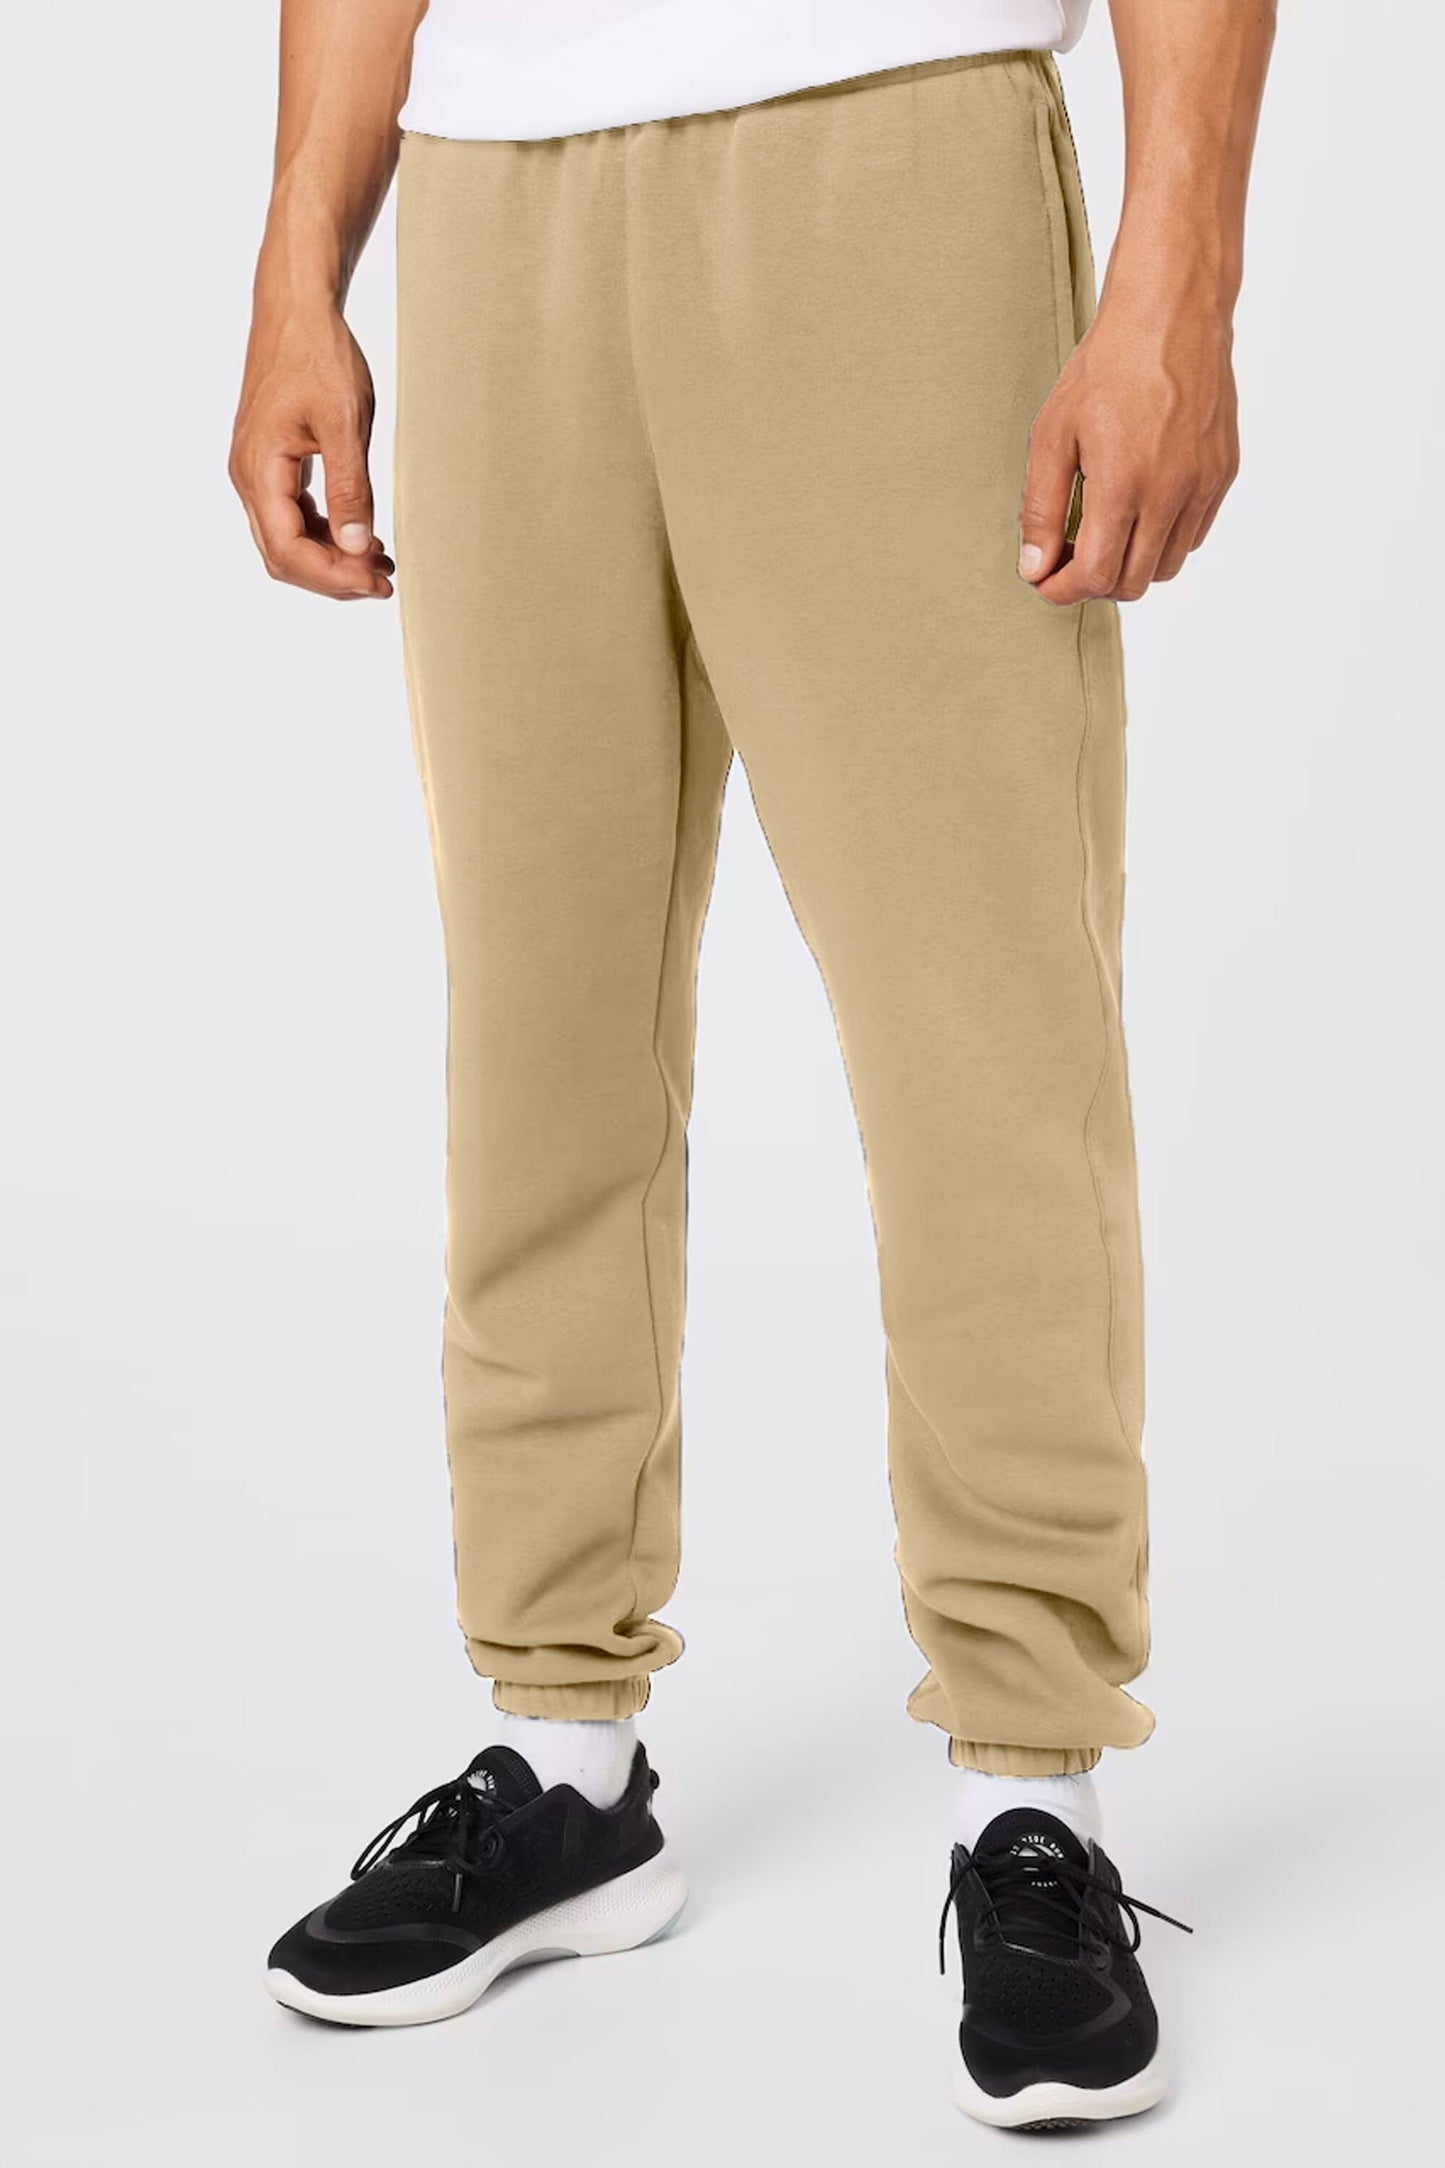 MAX 21 Men's Laghouat Fleece Sweat Pants Men's Trousers SZK 